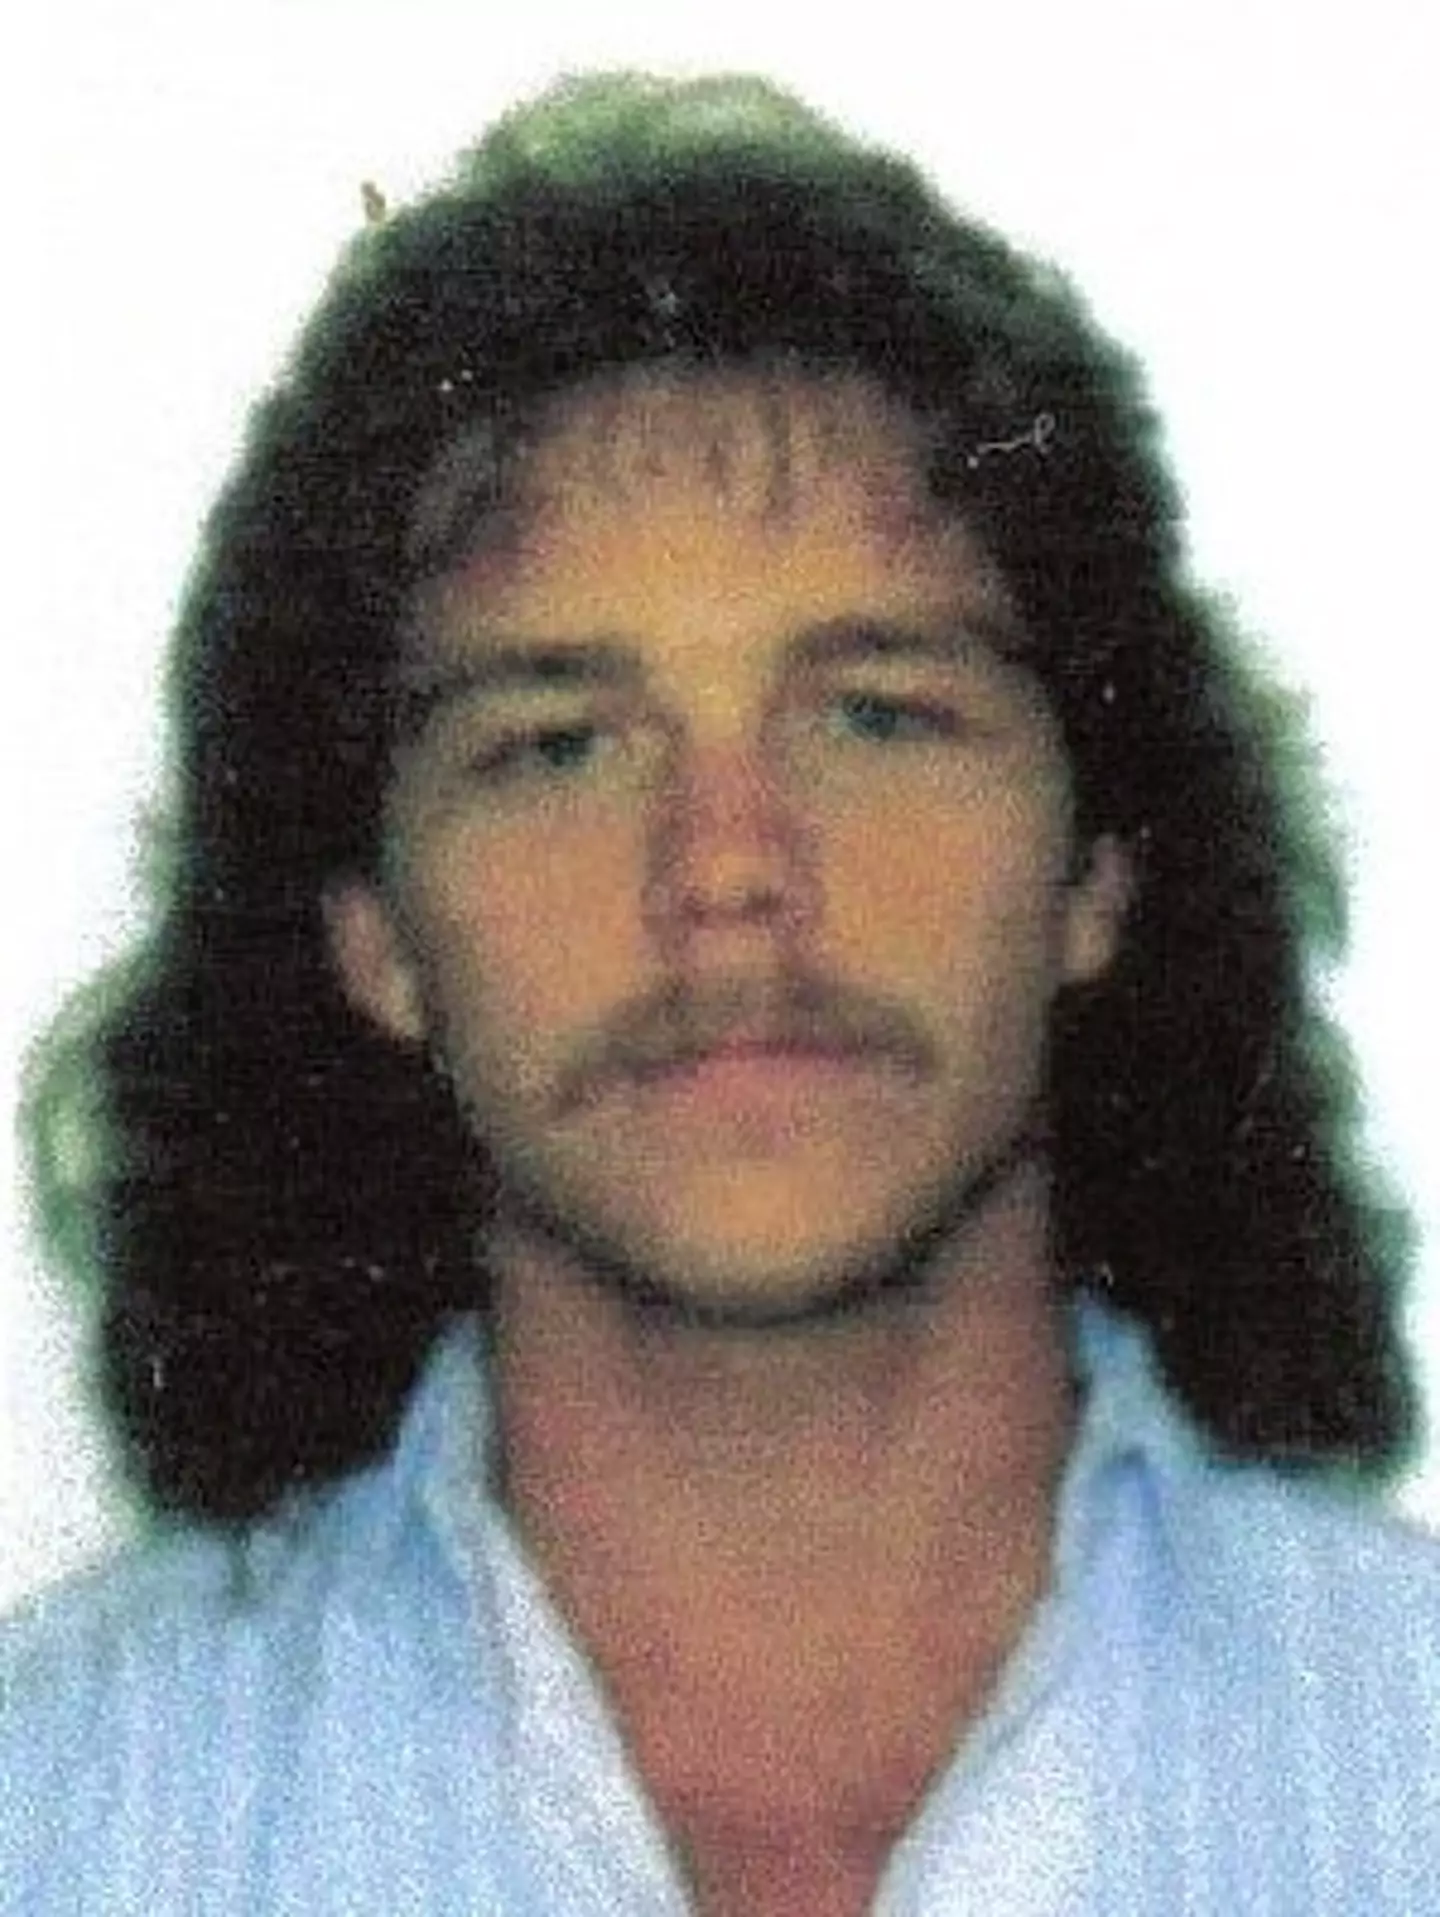 Robert Charles Towery murdered his victim in 1991.